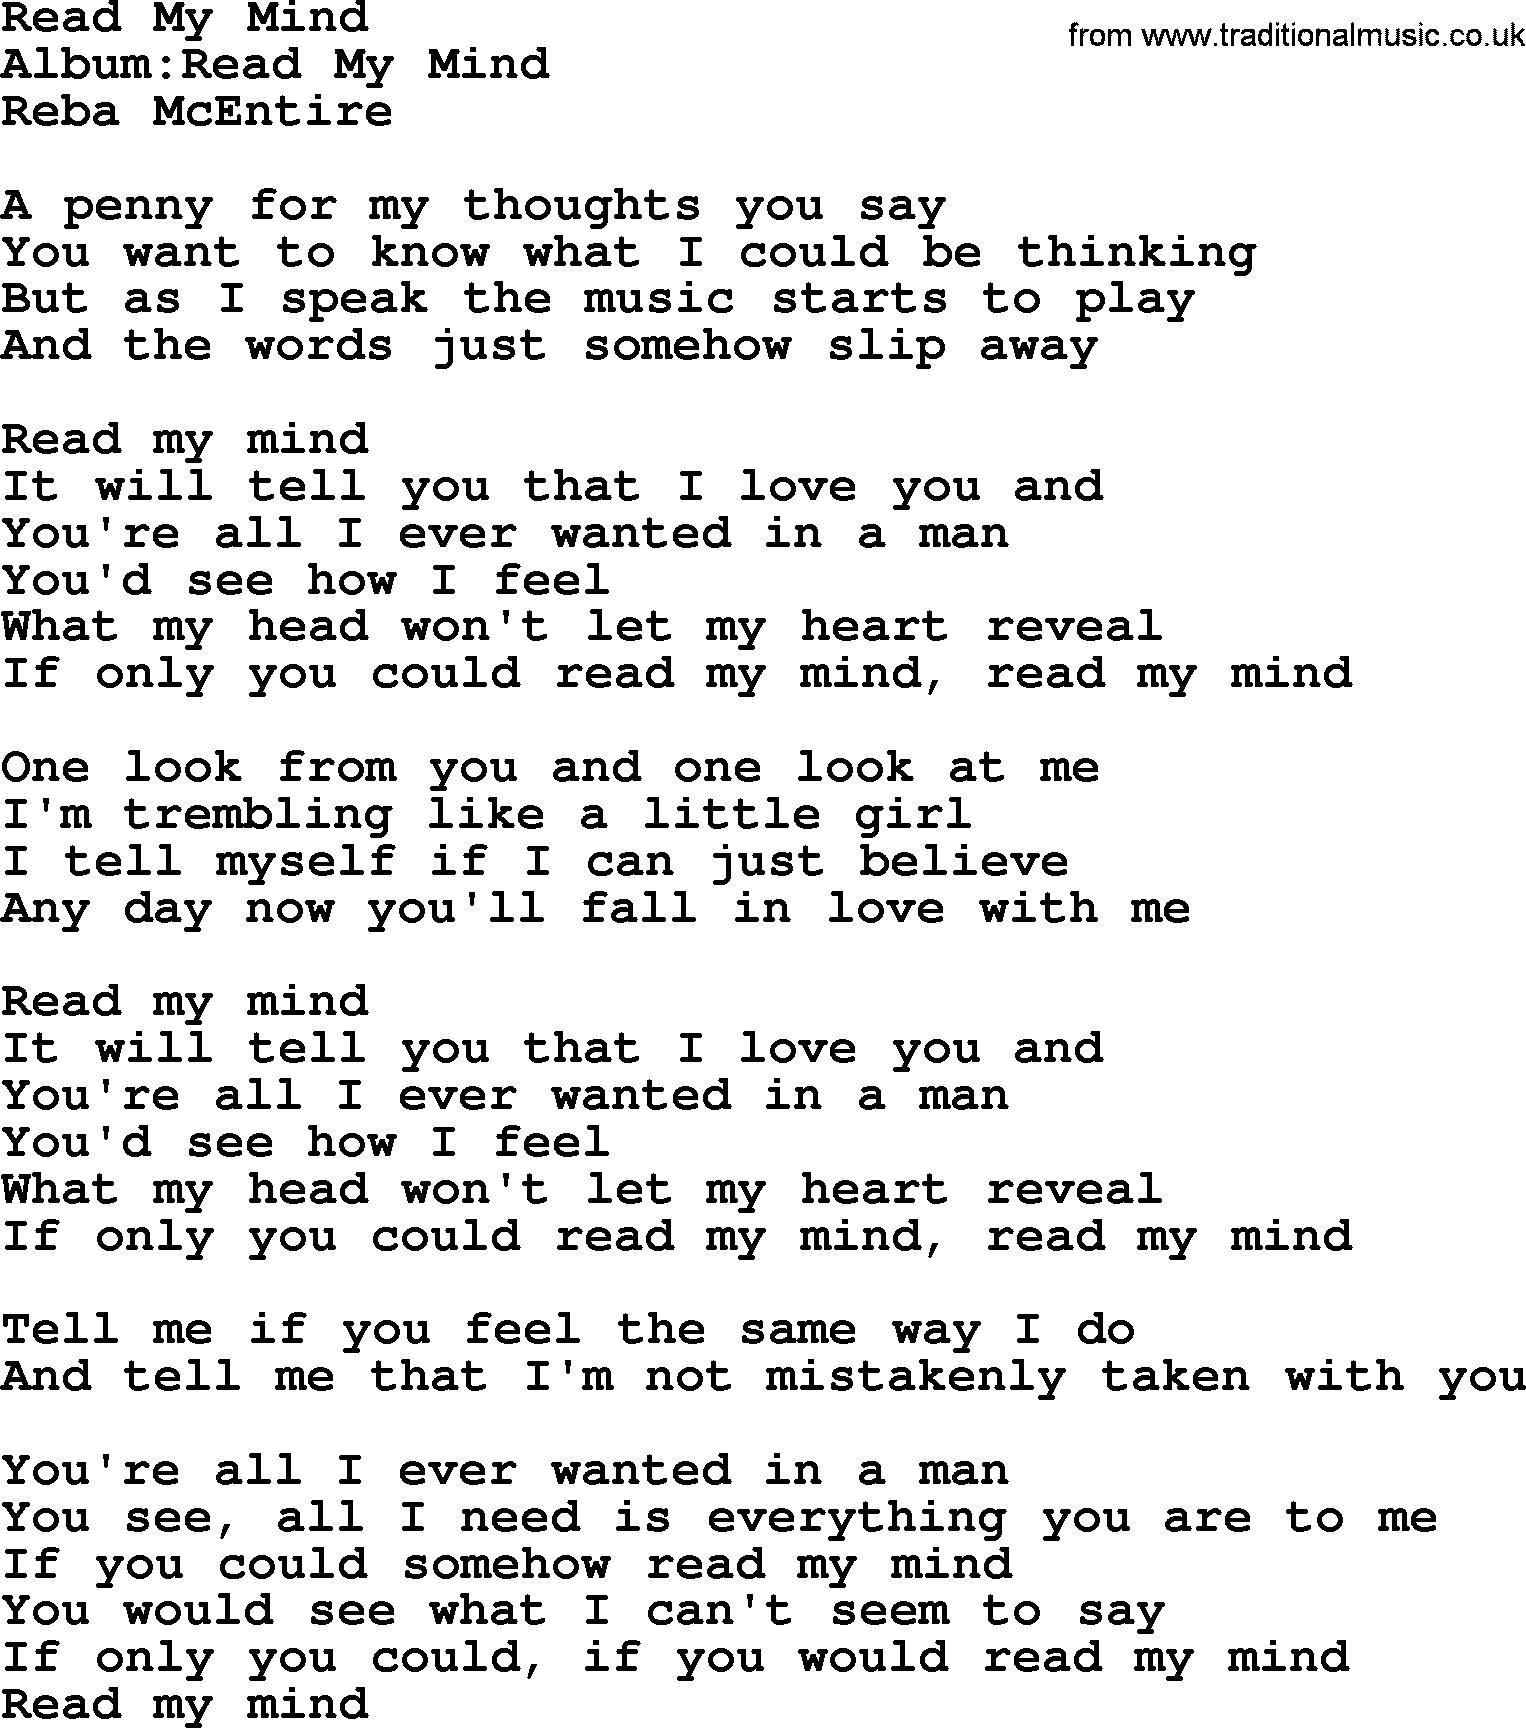 Reba McEntire song: Read My Mind lyrics